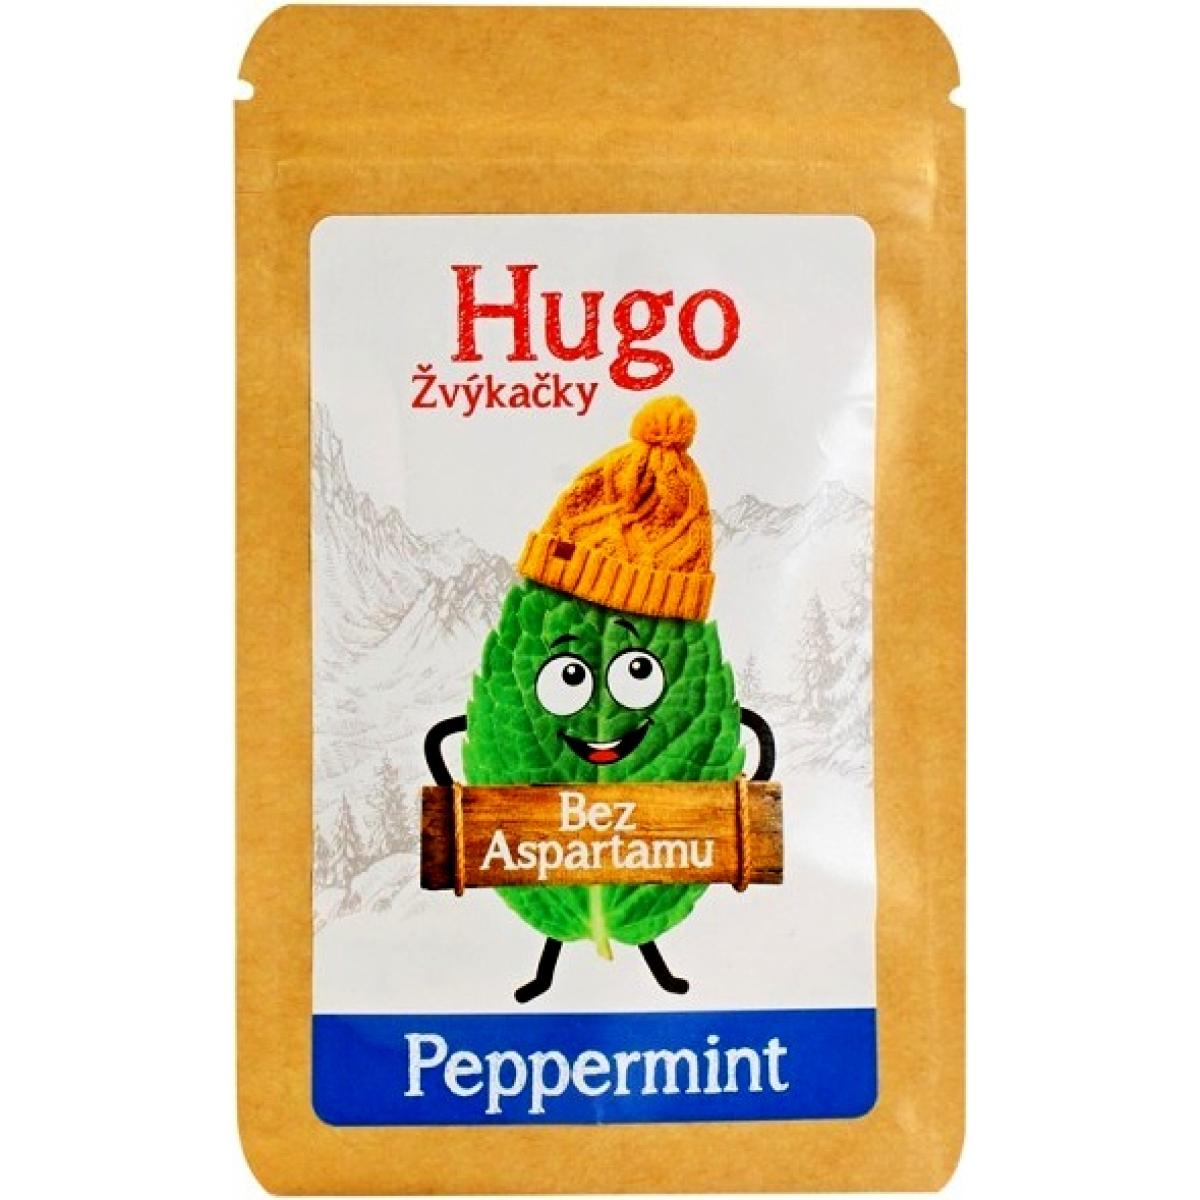 Xylitolové žuvačky pepermint Hugo 8,4g